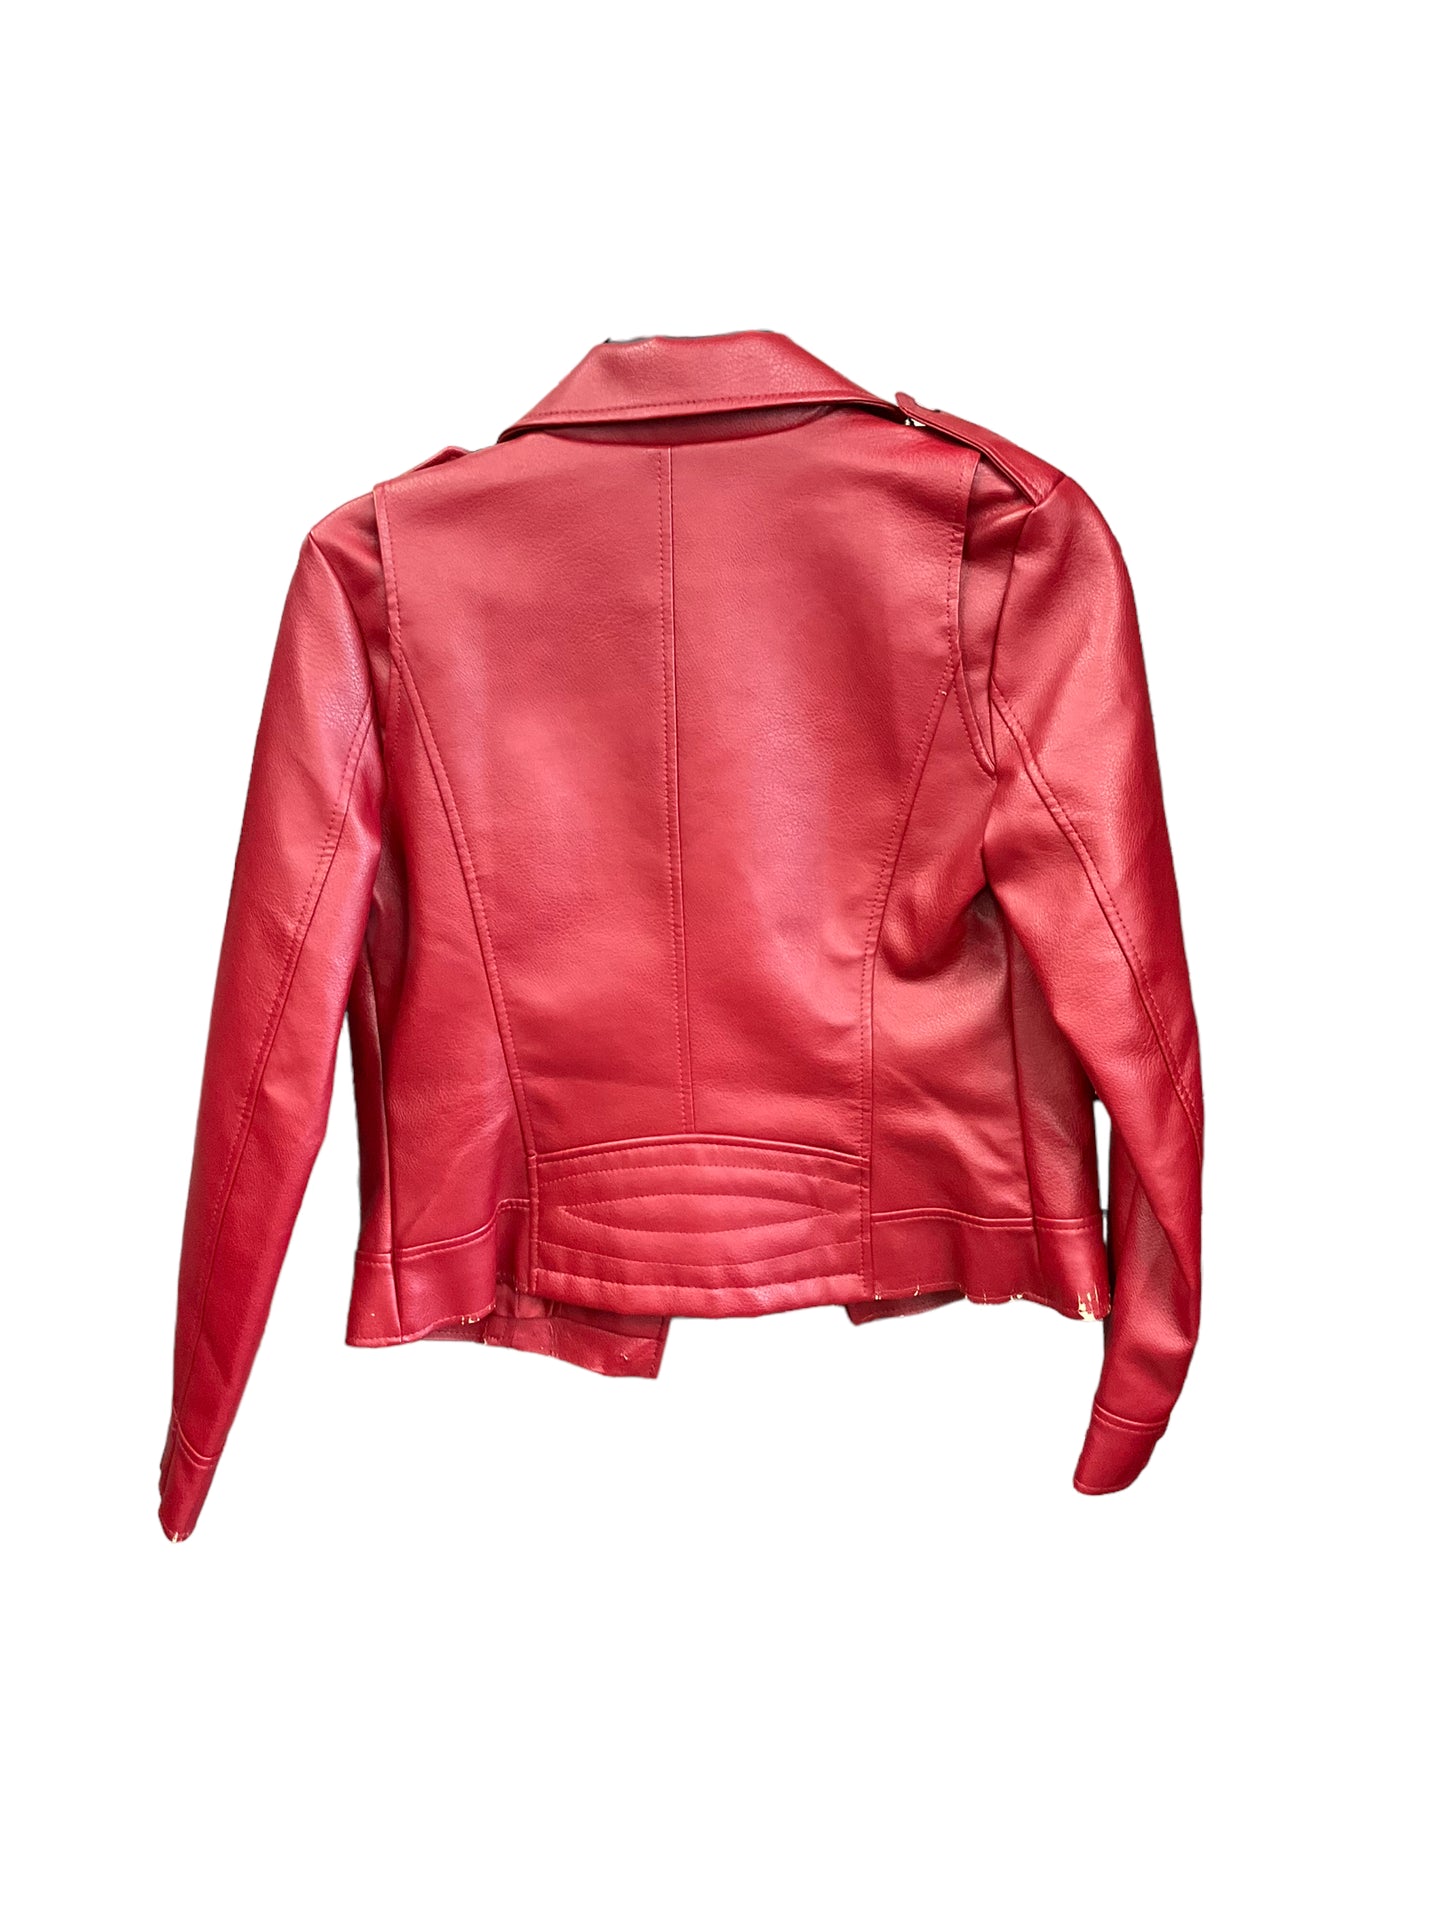 Jacket Moto Leather By Bb Dakota  Size: Xs